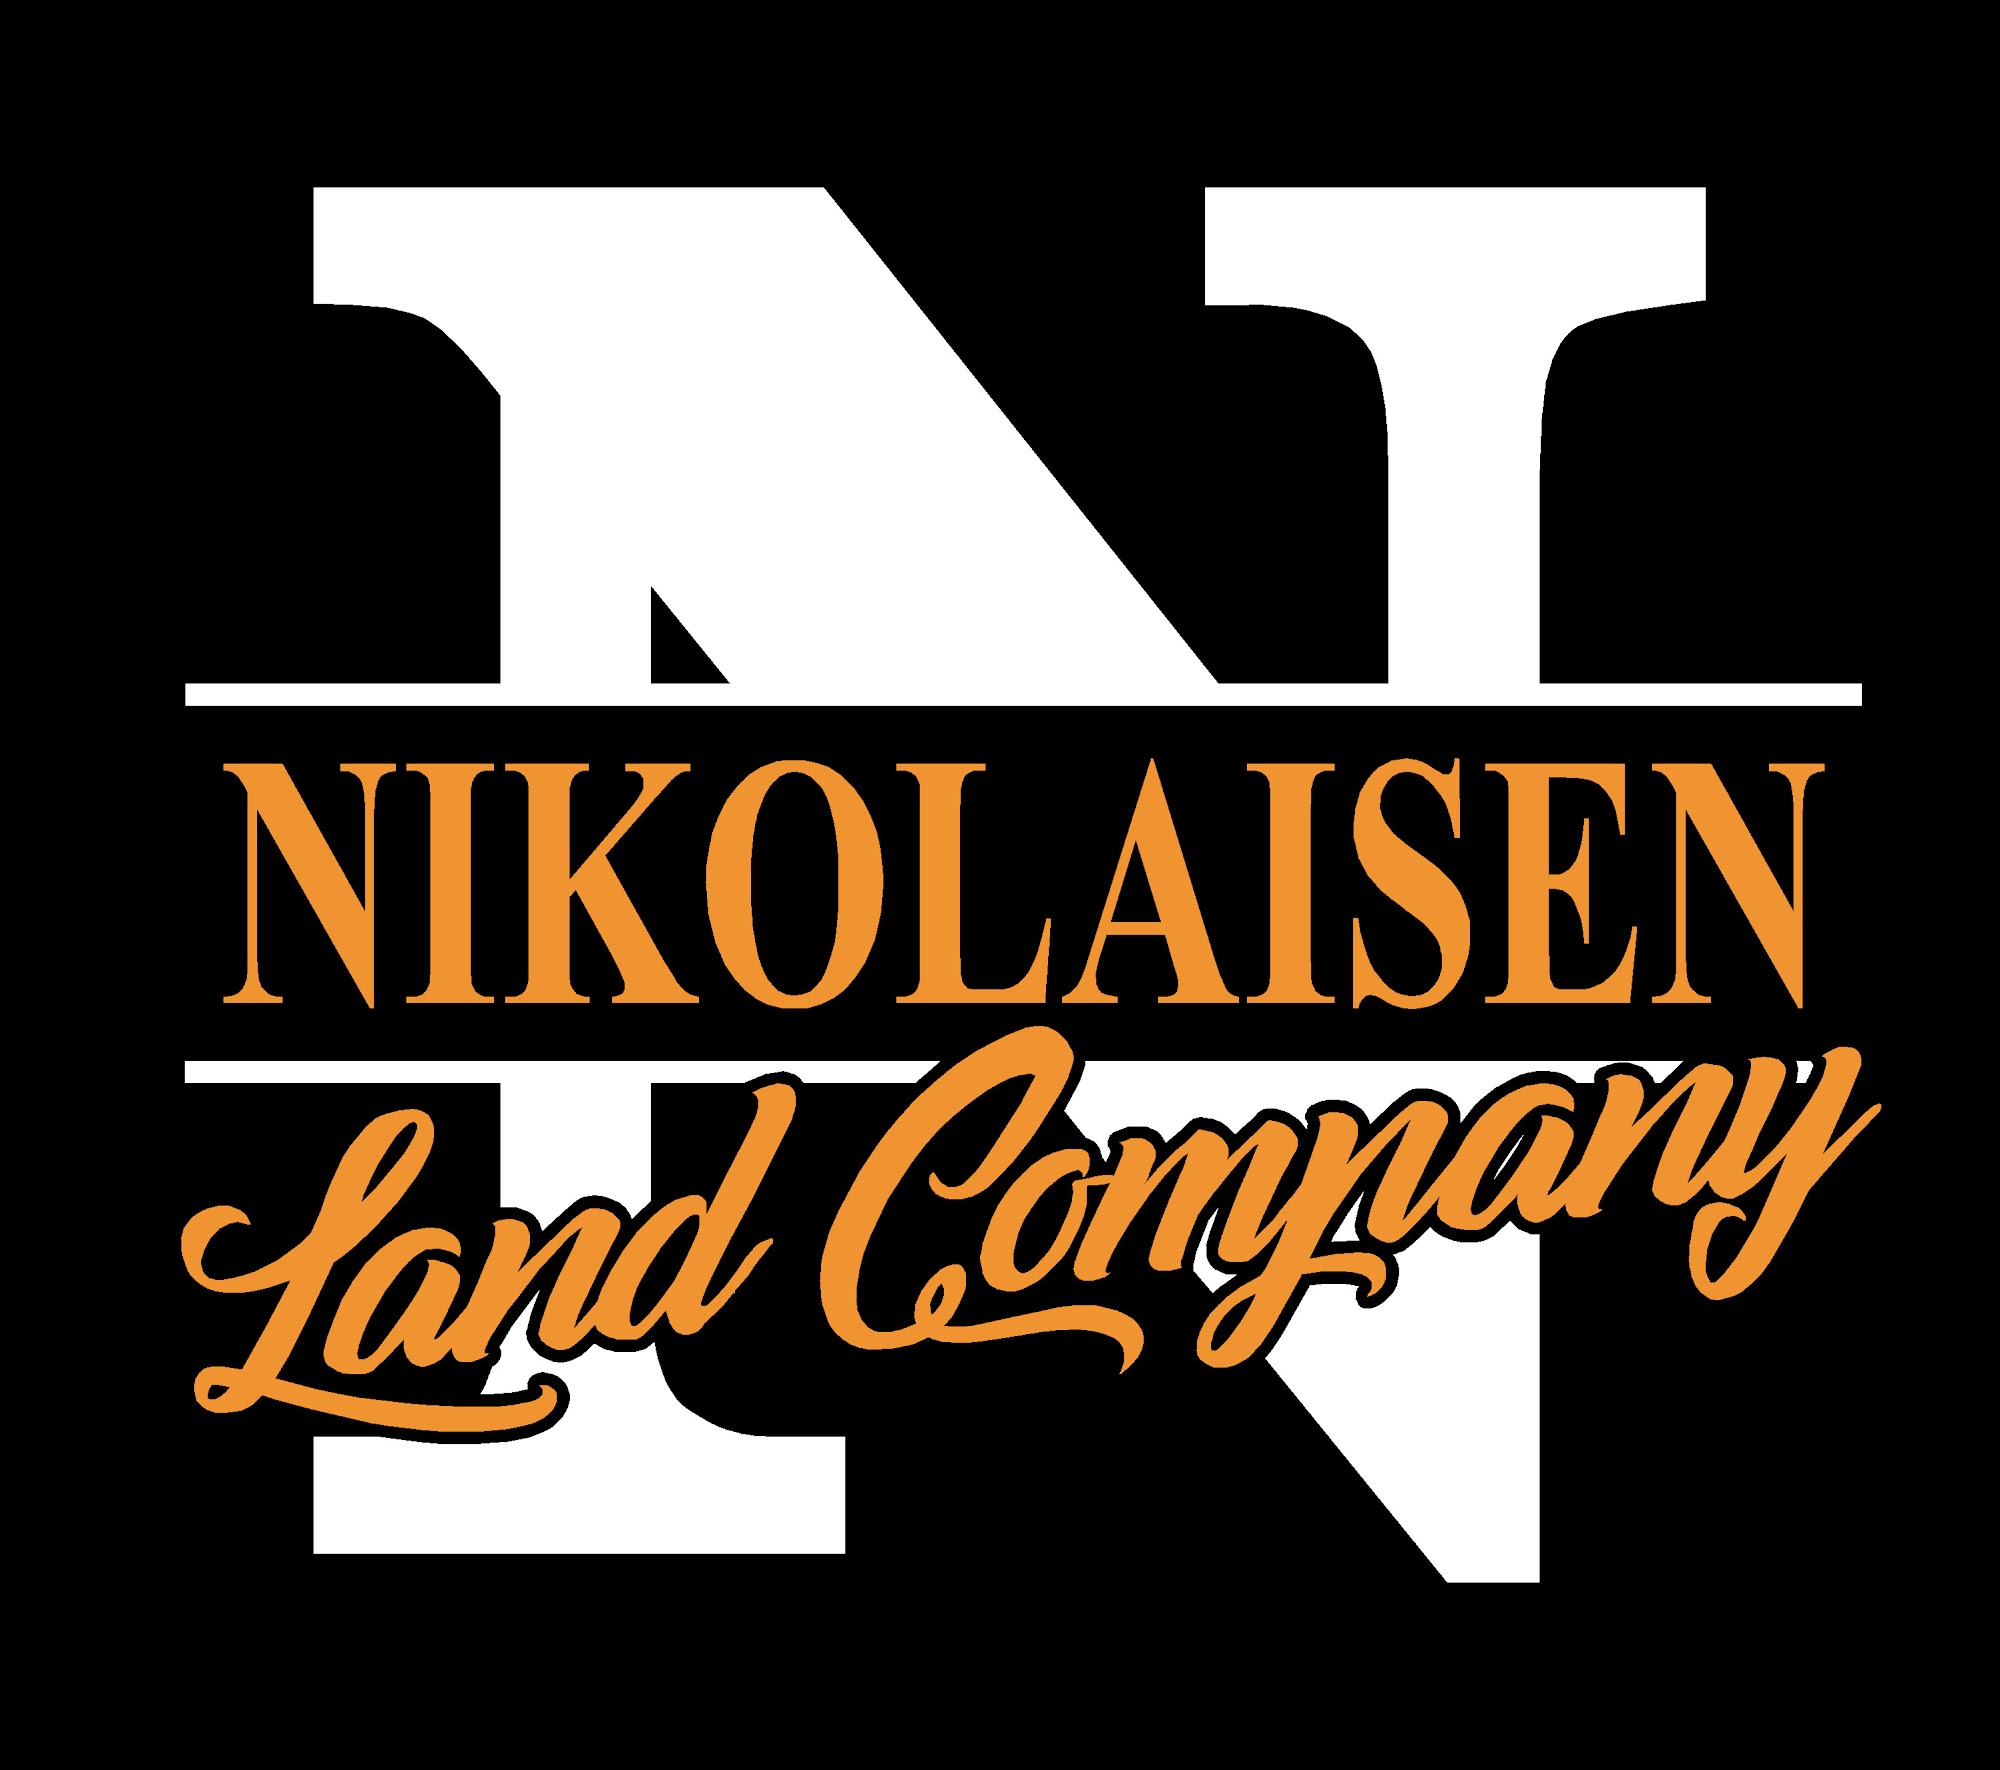 Nikolaisen Land Company 418 Main St, Cando North Dakota 58324